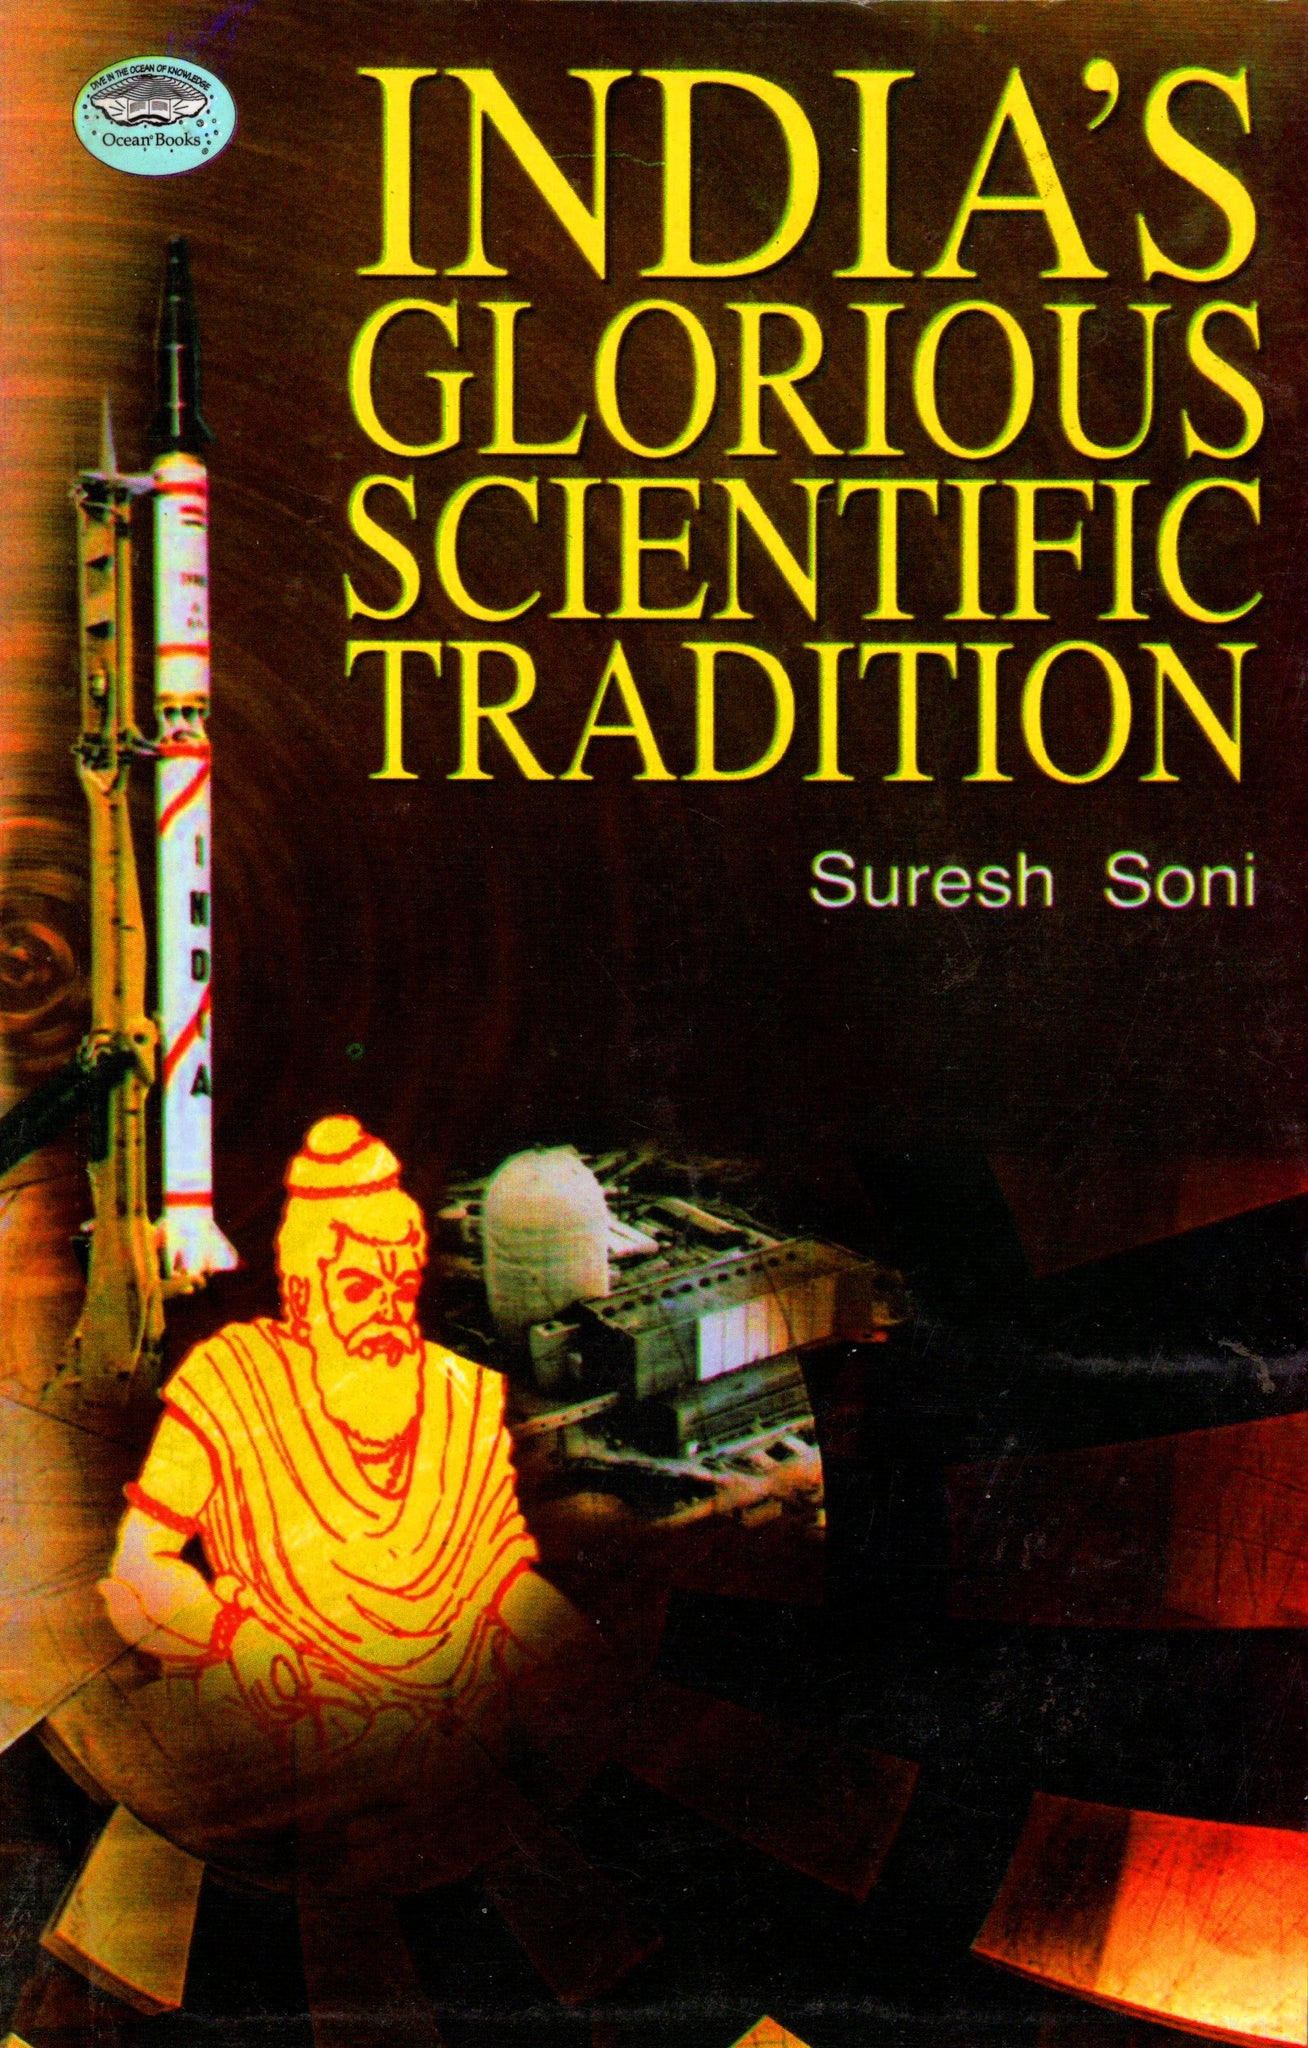 India's glorious scientific  tradition